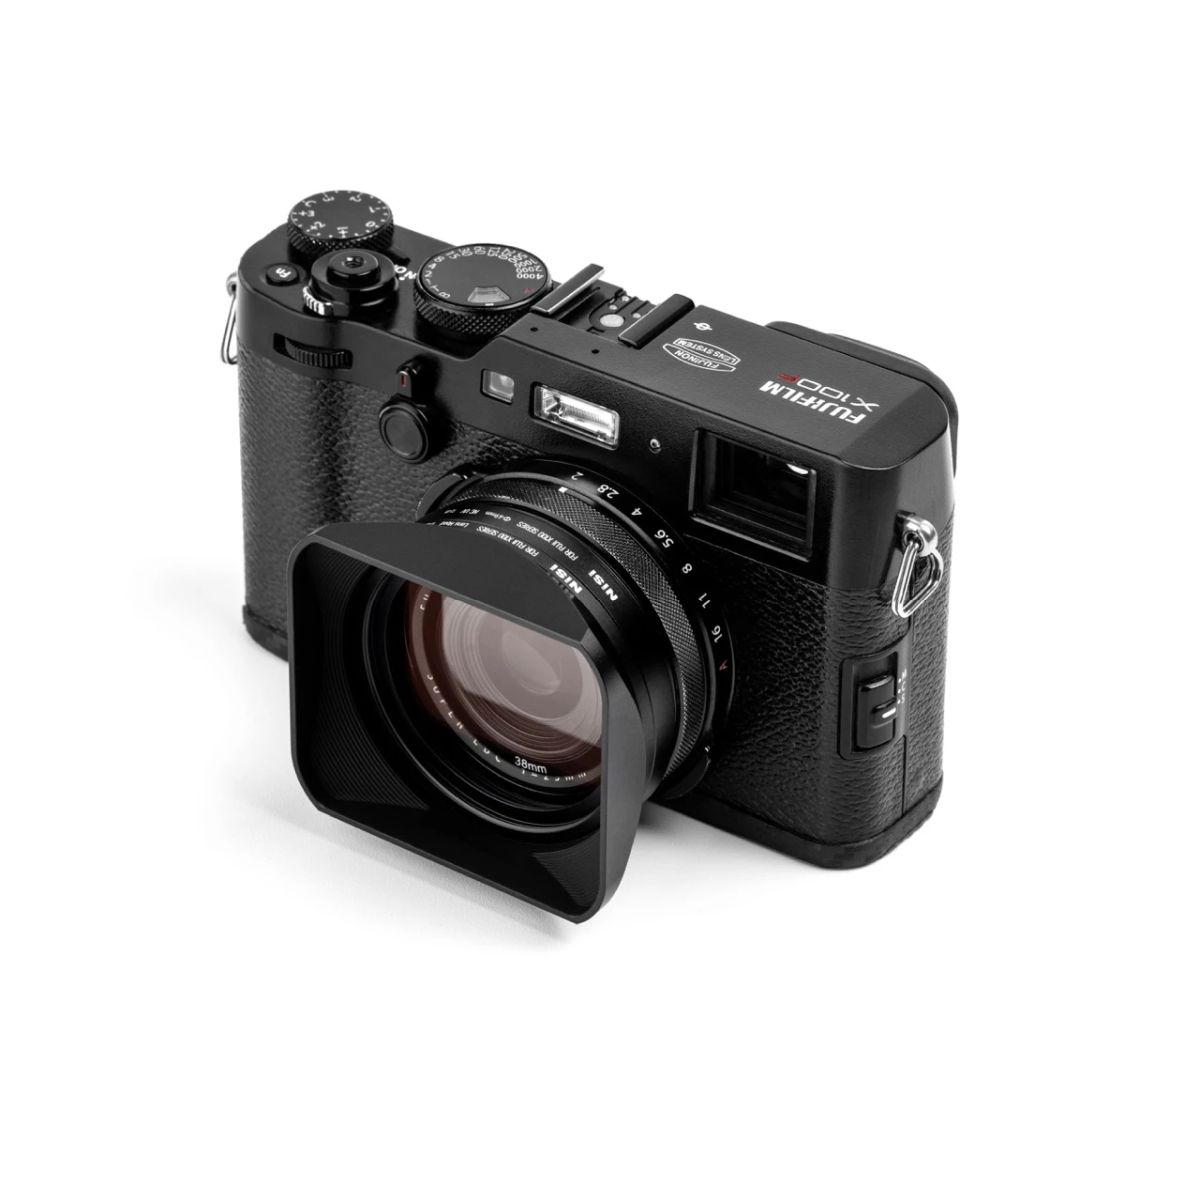 NiSi Lens Hood Kit – Fujifilm X100 Serie Schwarz